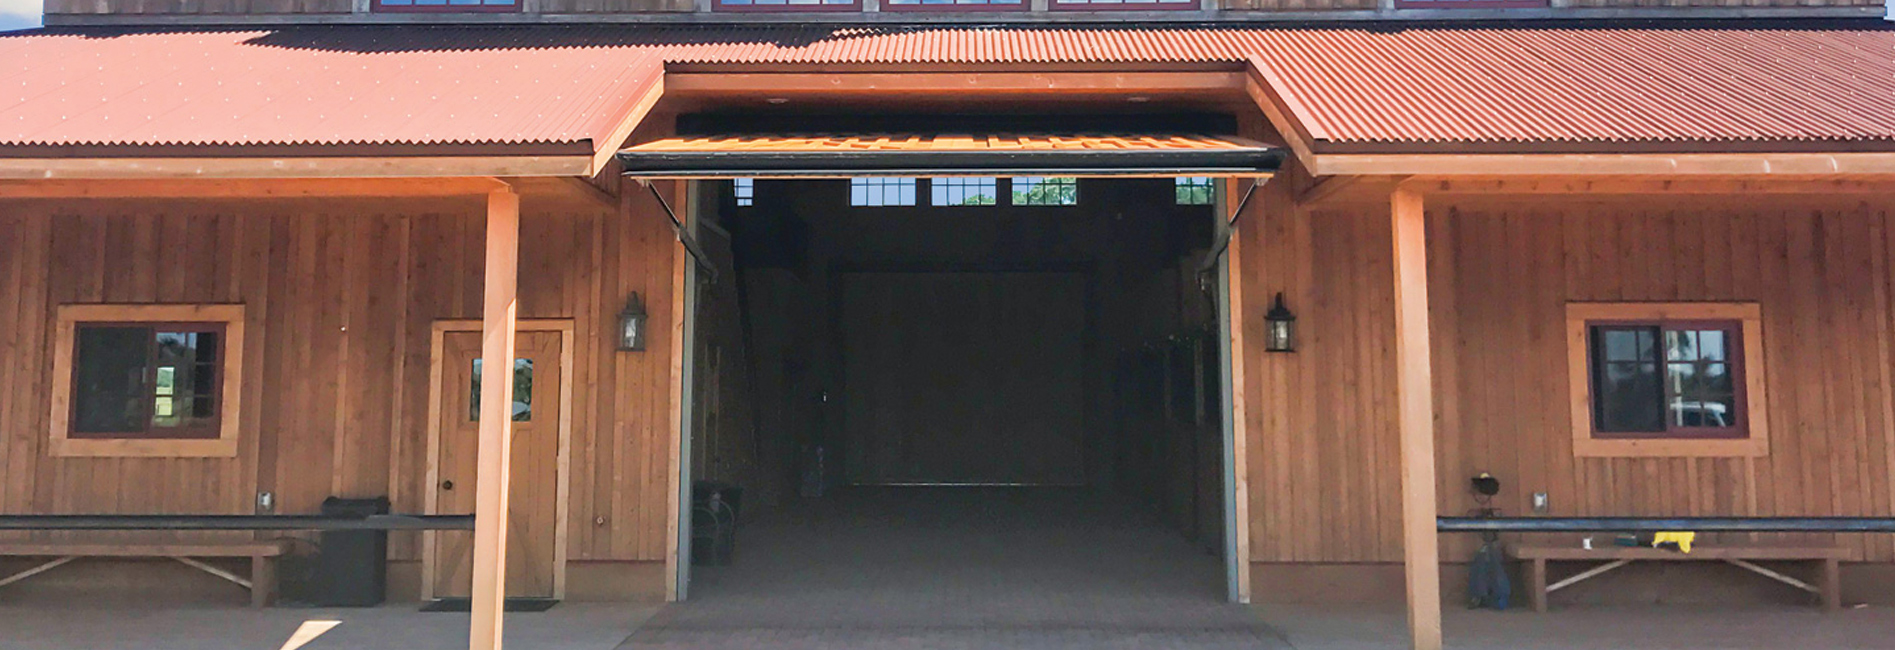 Hydraulic Architectural Door - Vikings Museum